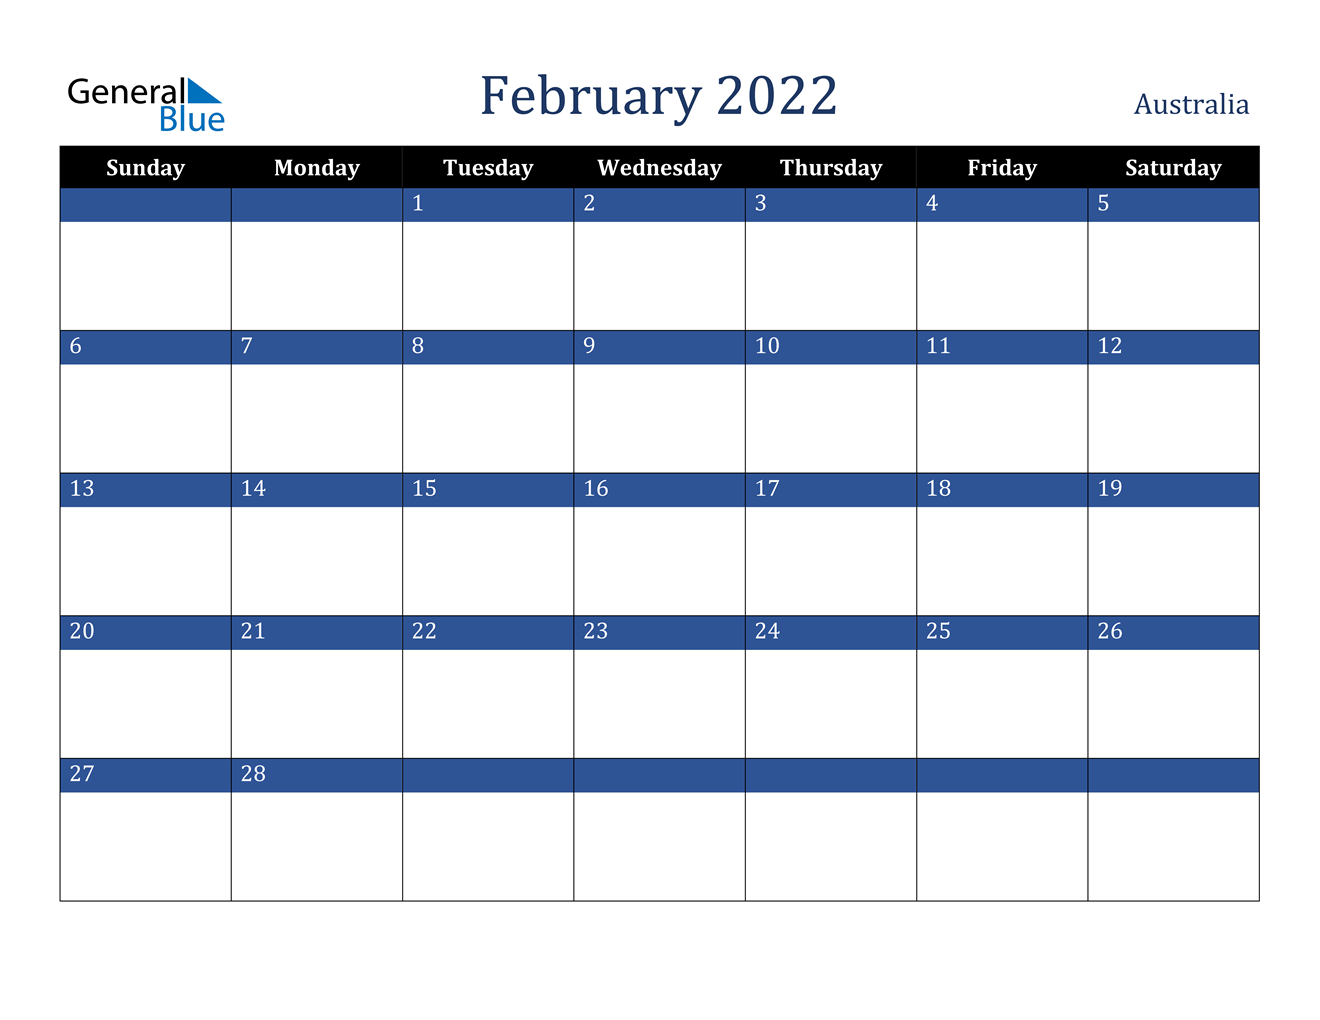 February 2022 Calendar - Australia